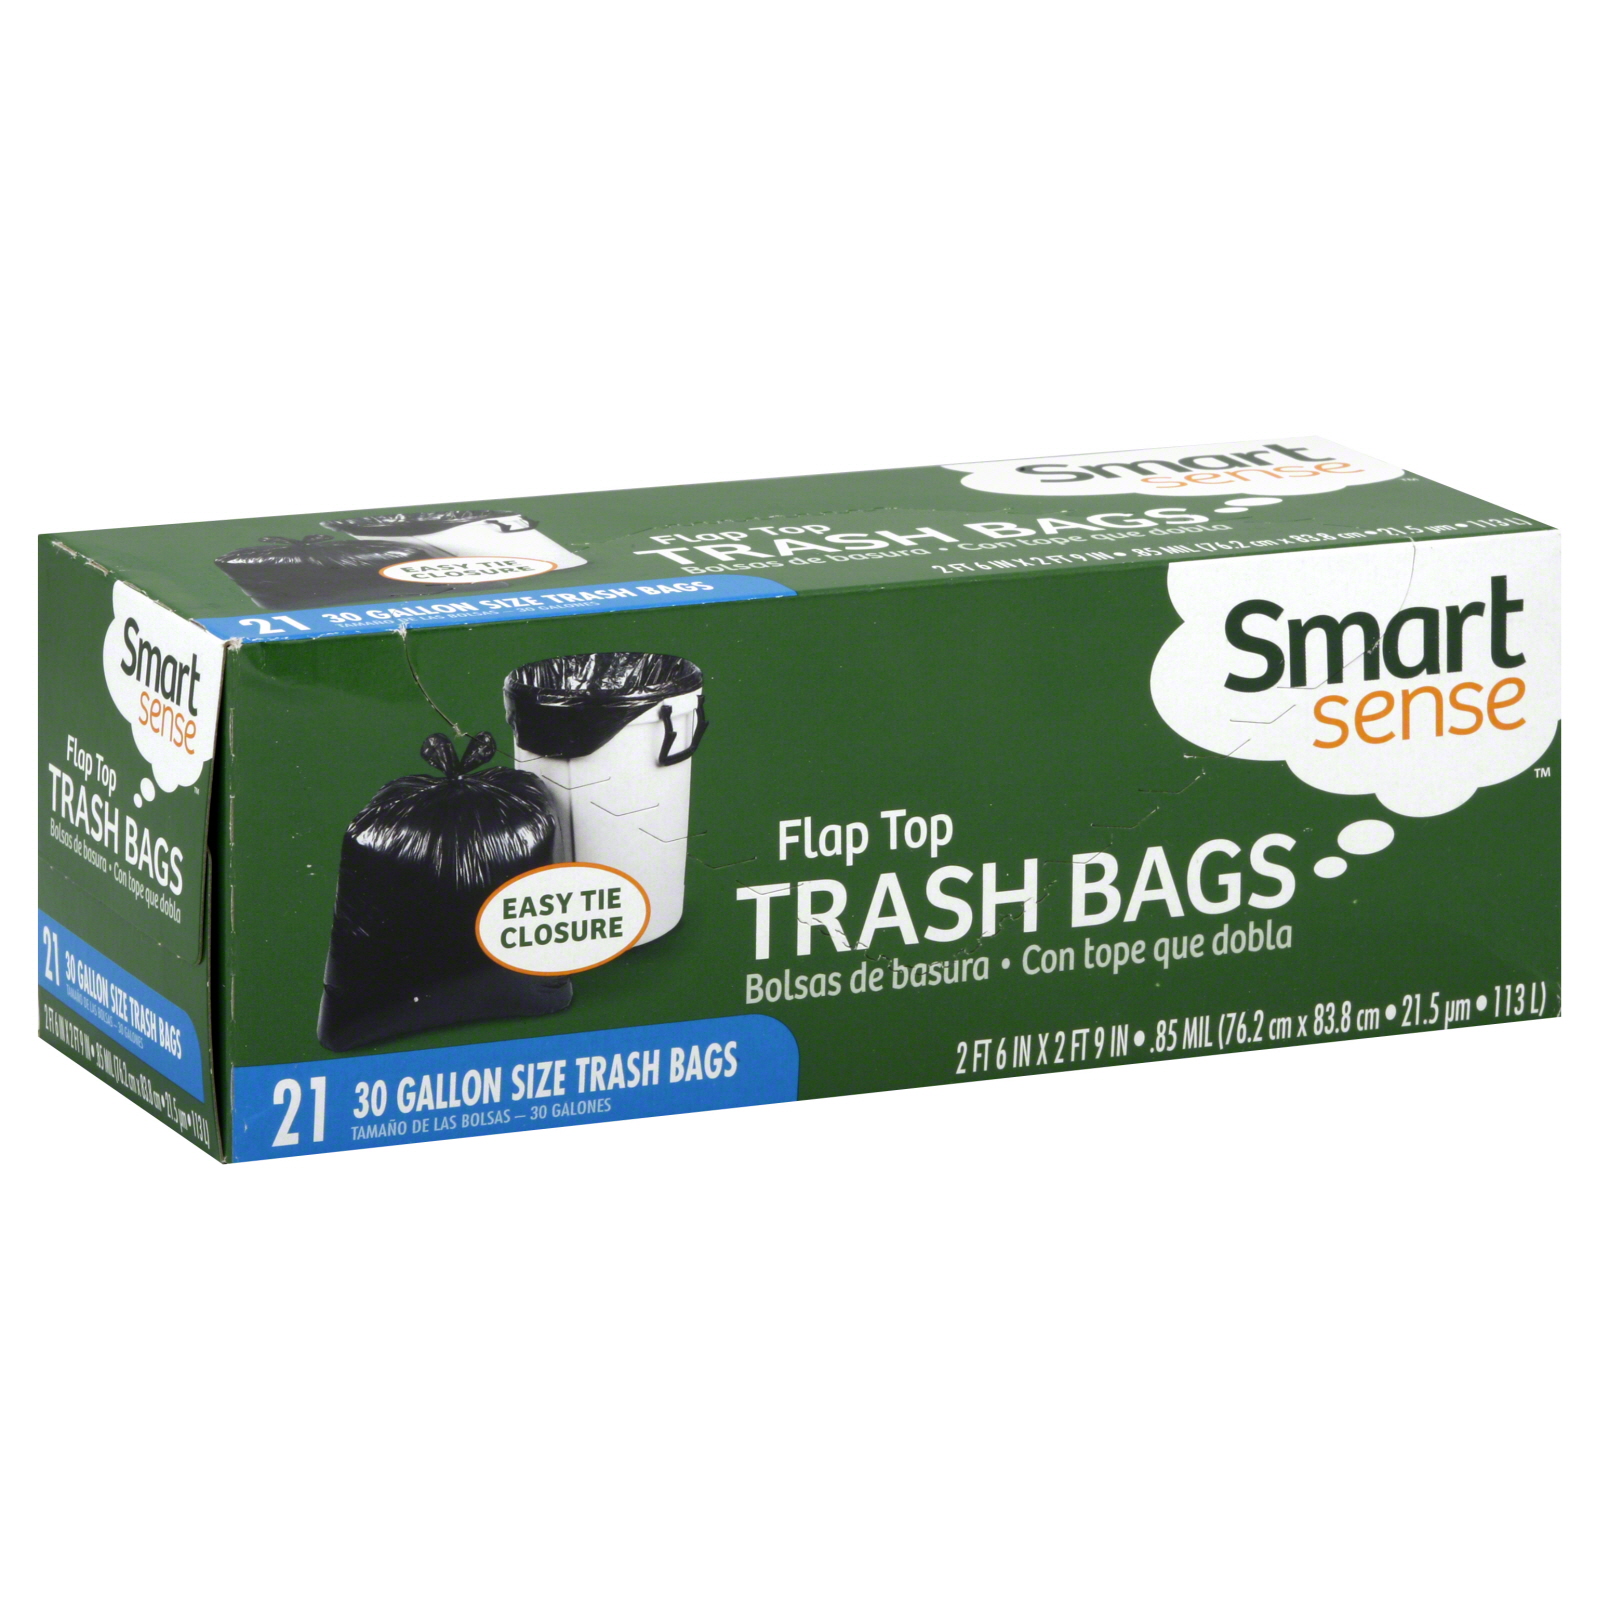 Trash Bags, Flat Top, 30 Gallon Size, 21 bags